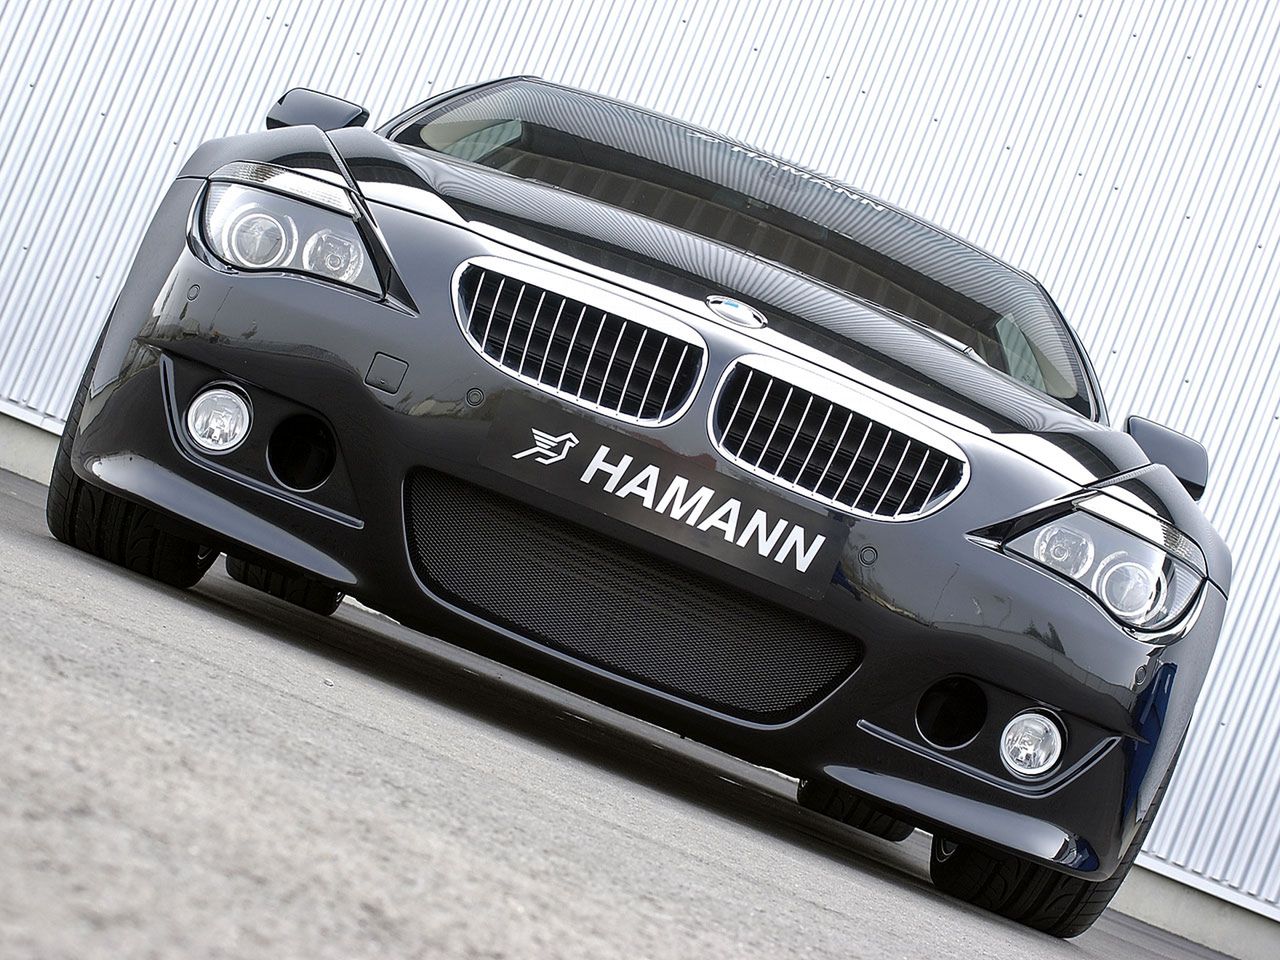 BMW Serii 6 Hamann